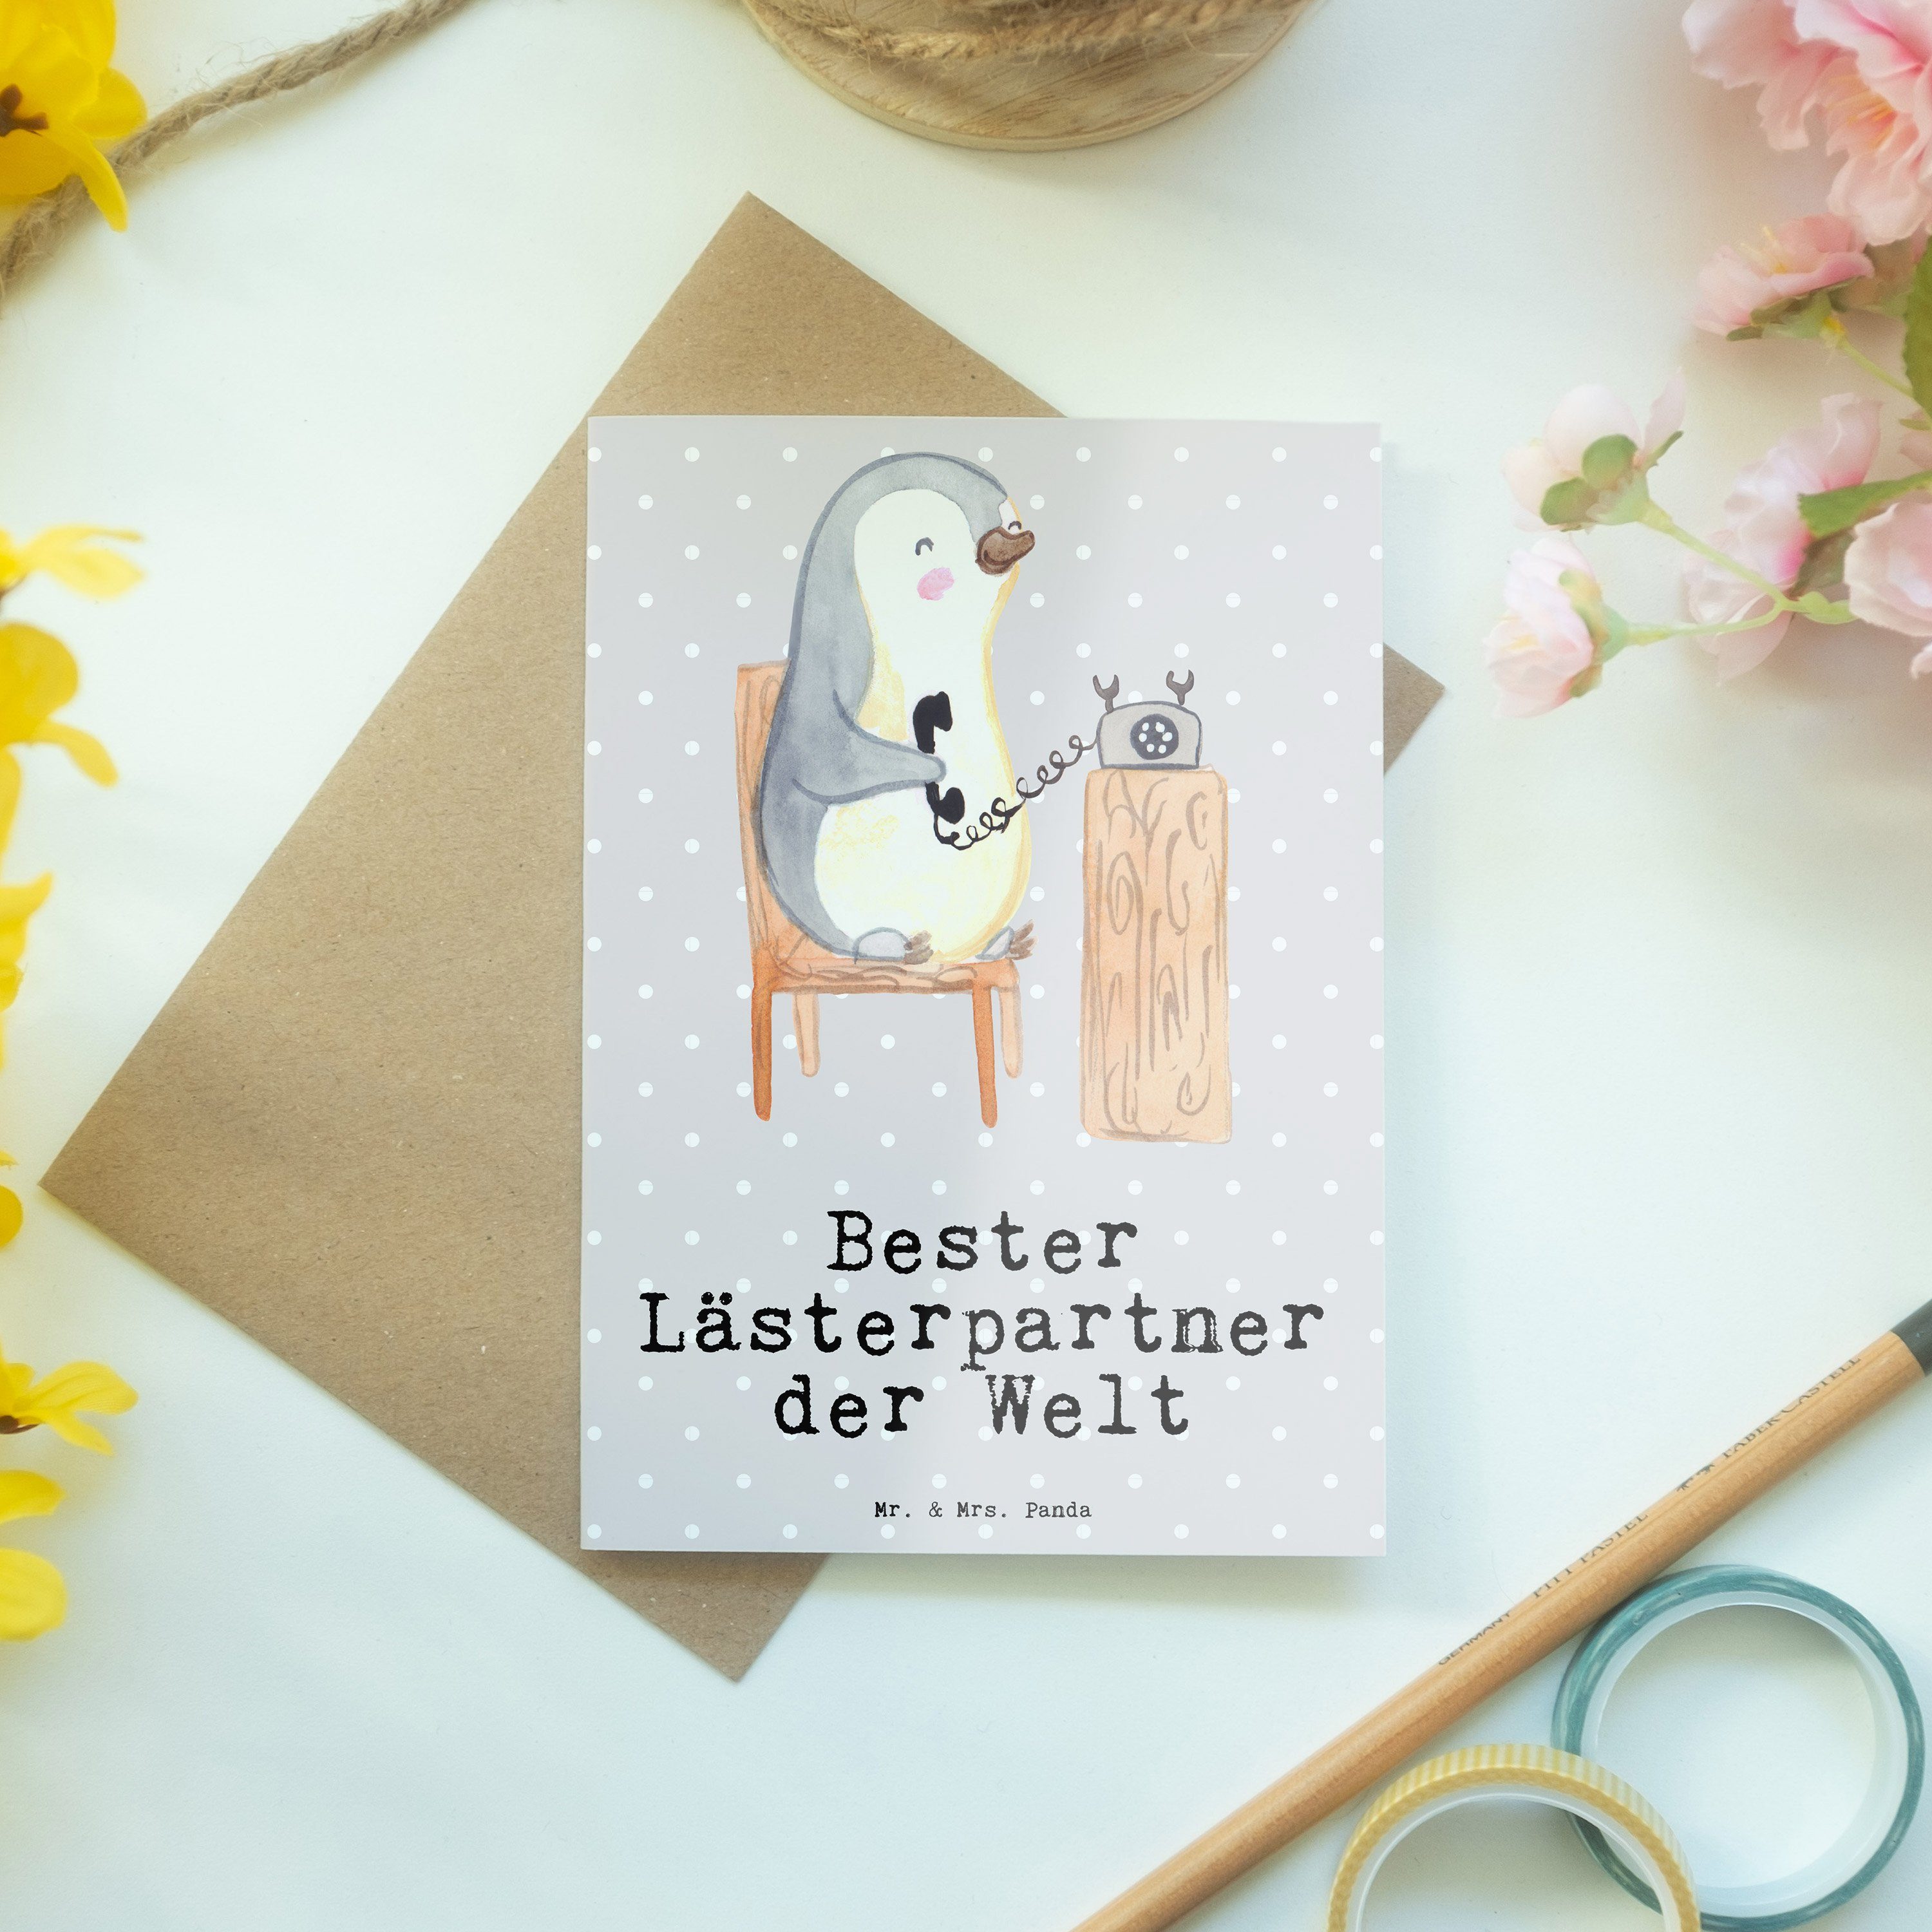 Mr. & Mrs. Panda Grußkarte Welt Pinguin Pastell Klap Lästerpartner - Grau Bester Geschenk, - der